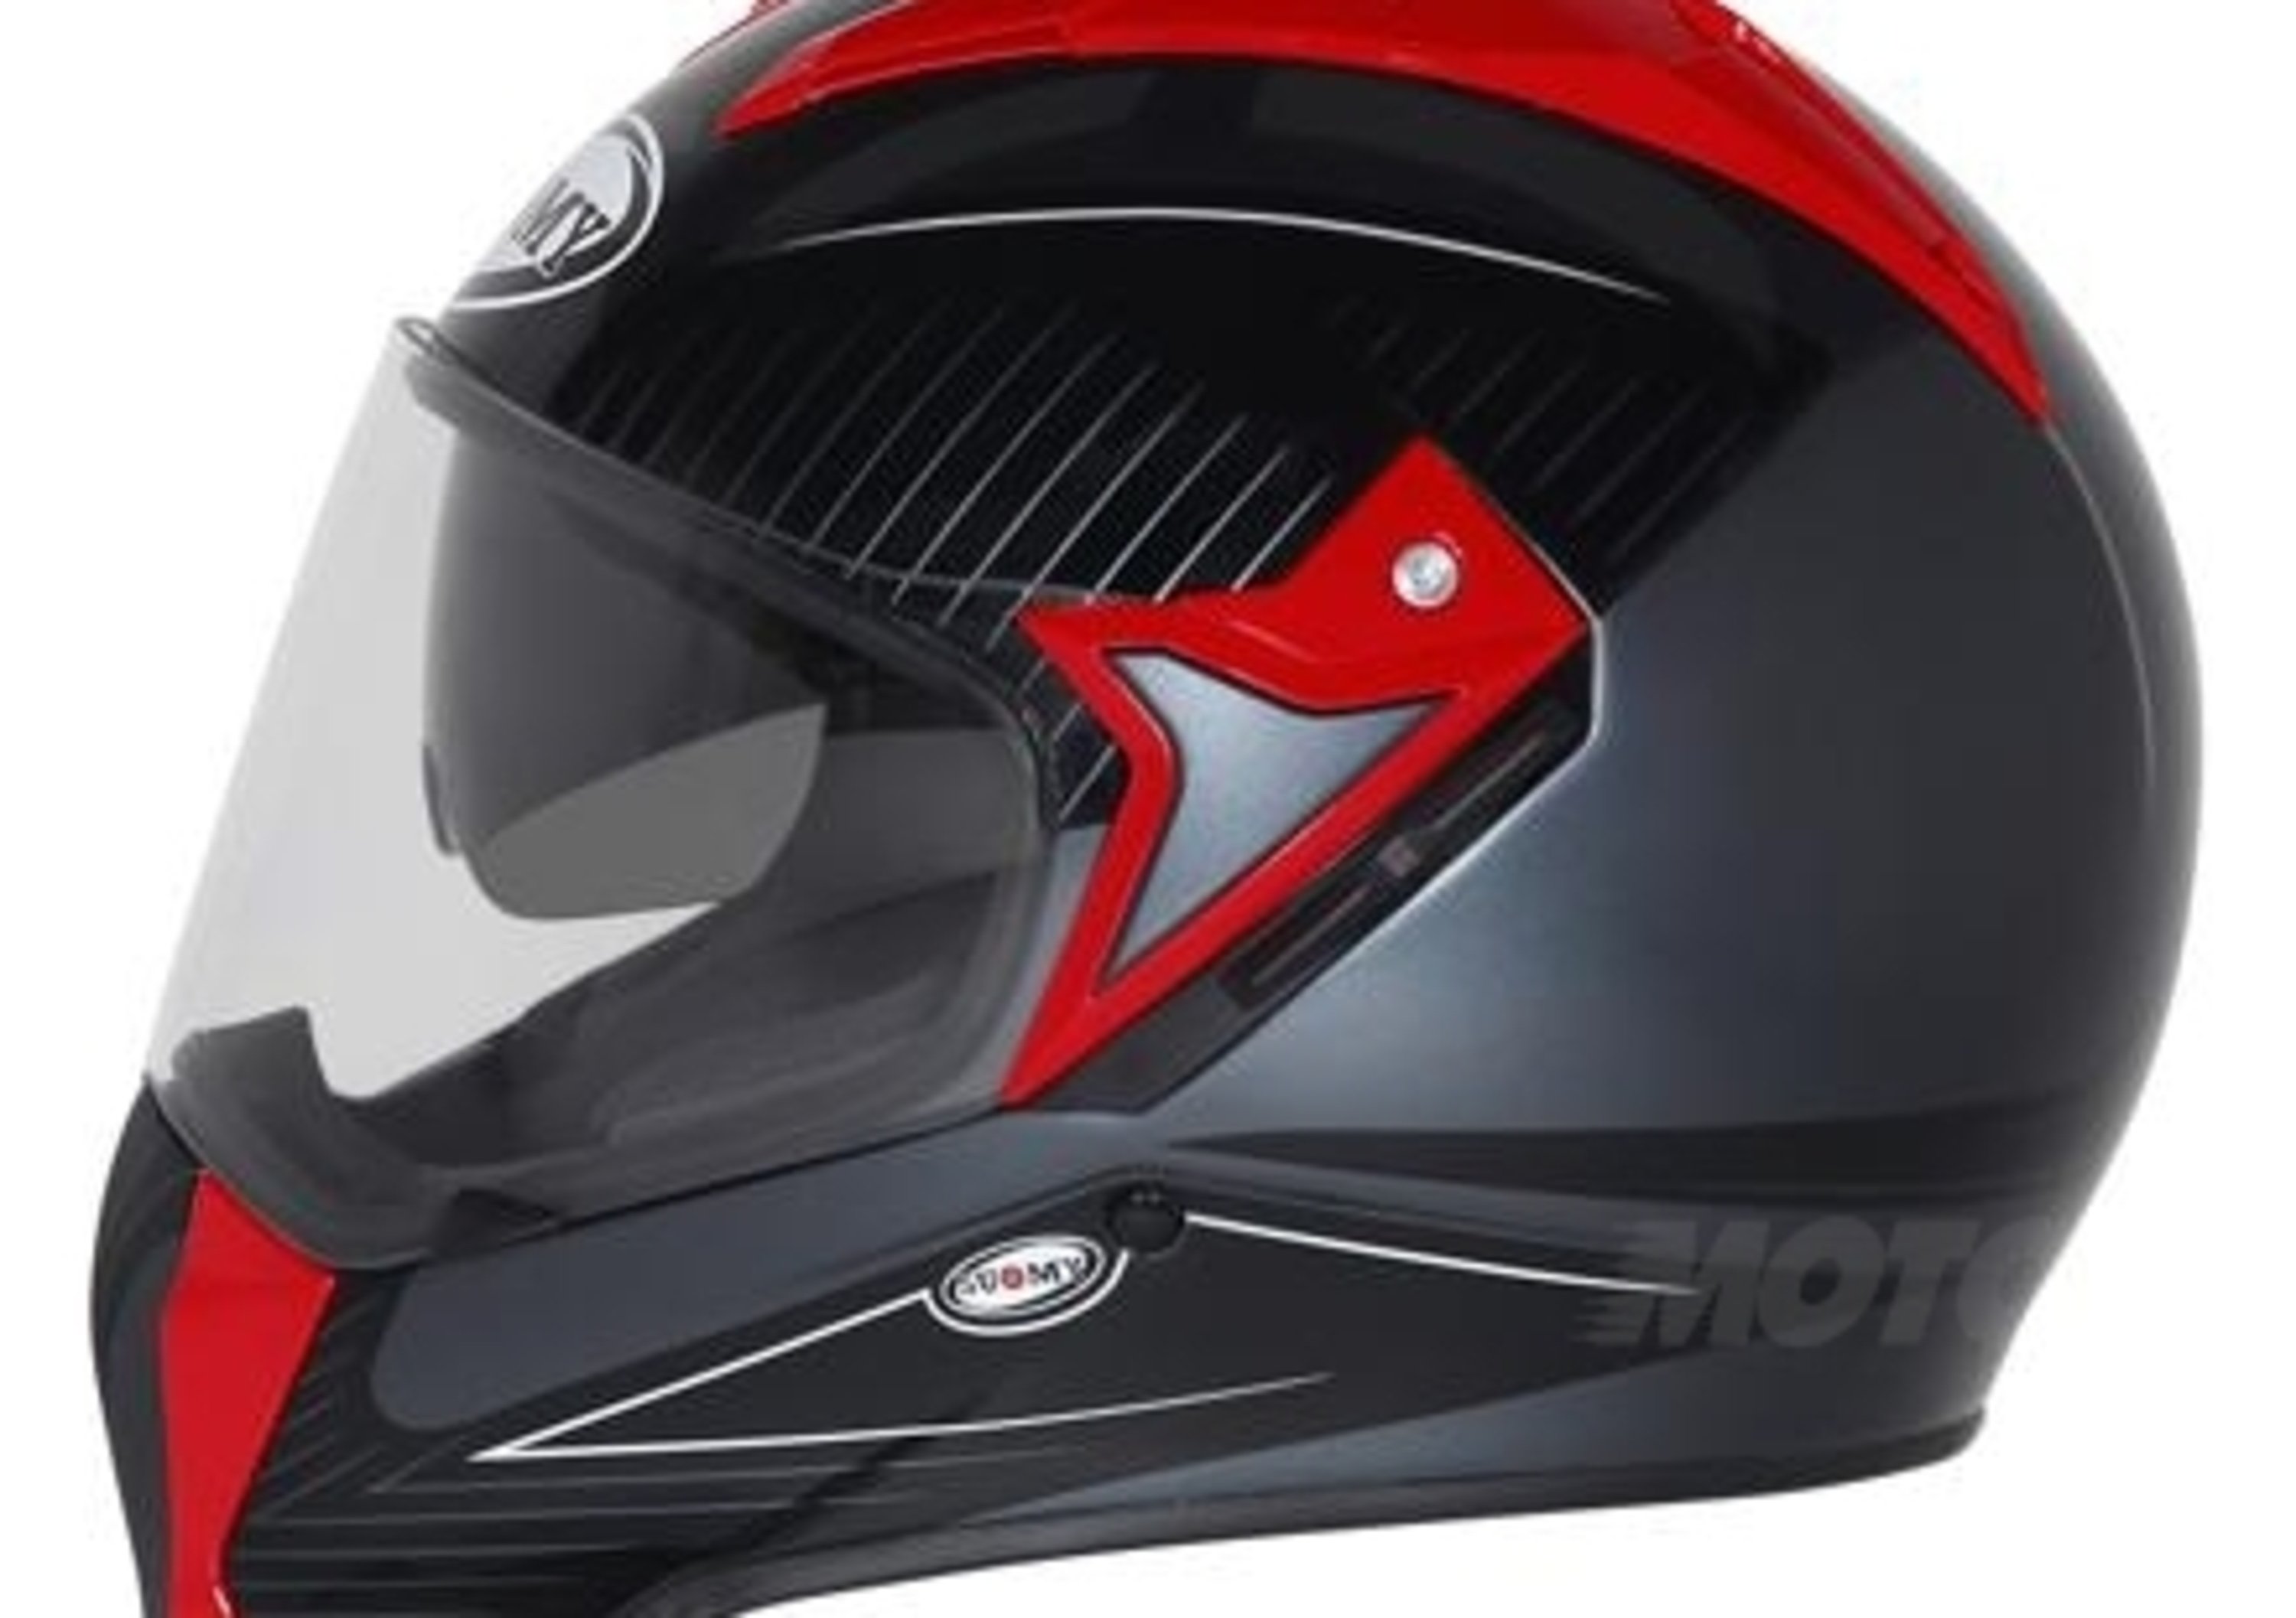 Nuovo casco Suomy MX Tourer